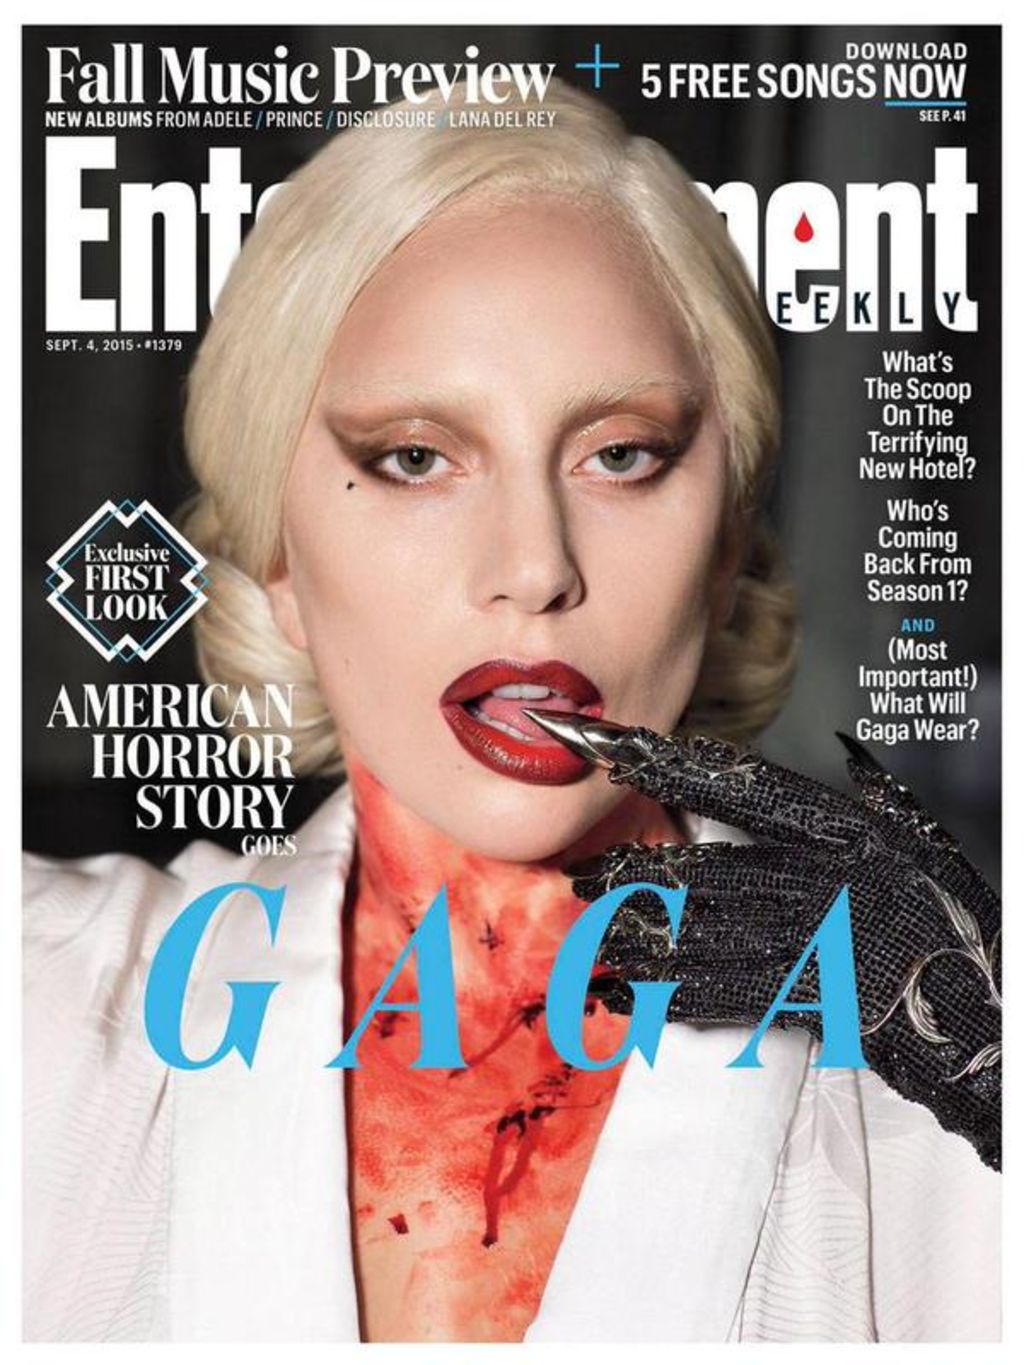 Revelan imágenes de Gaga en AHS